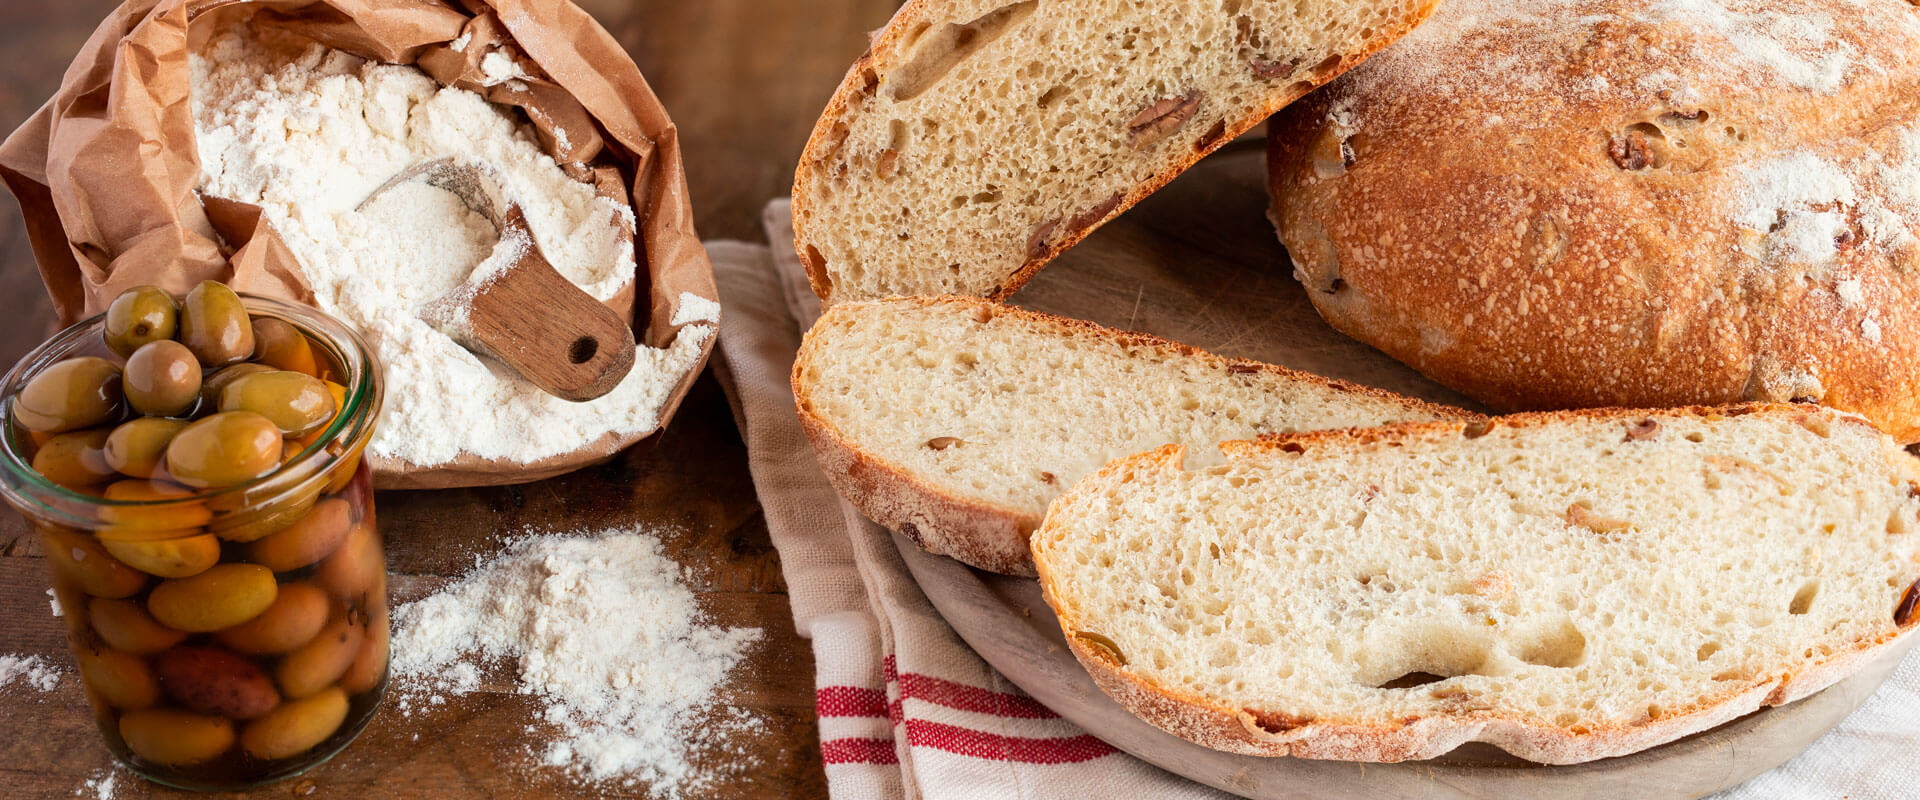 Bread with olive oil – Fratelli Carli